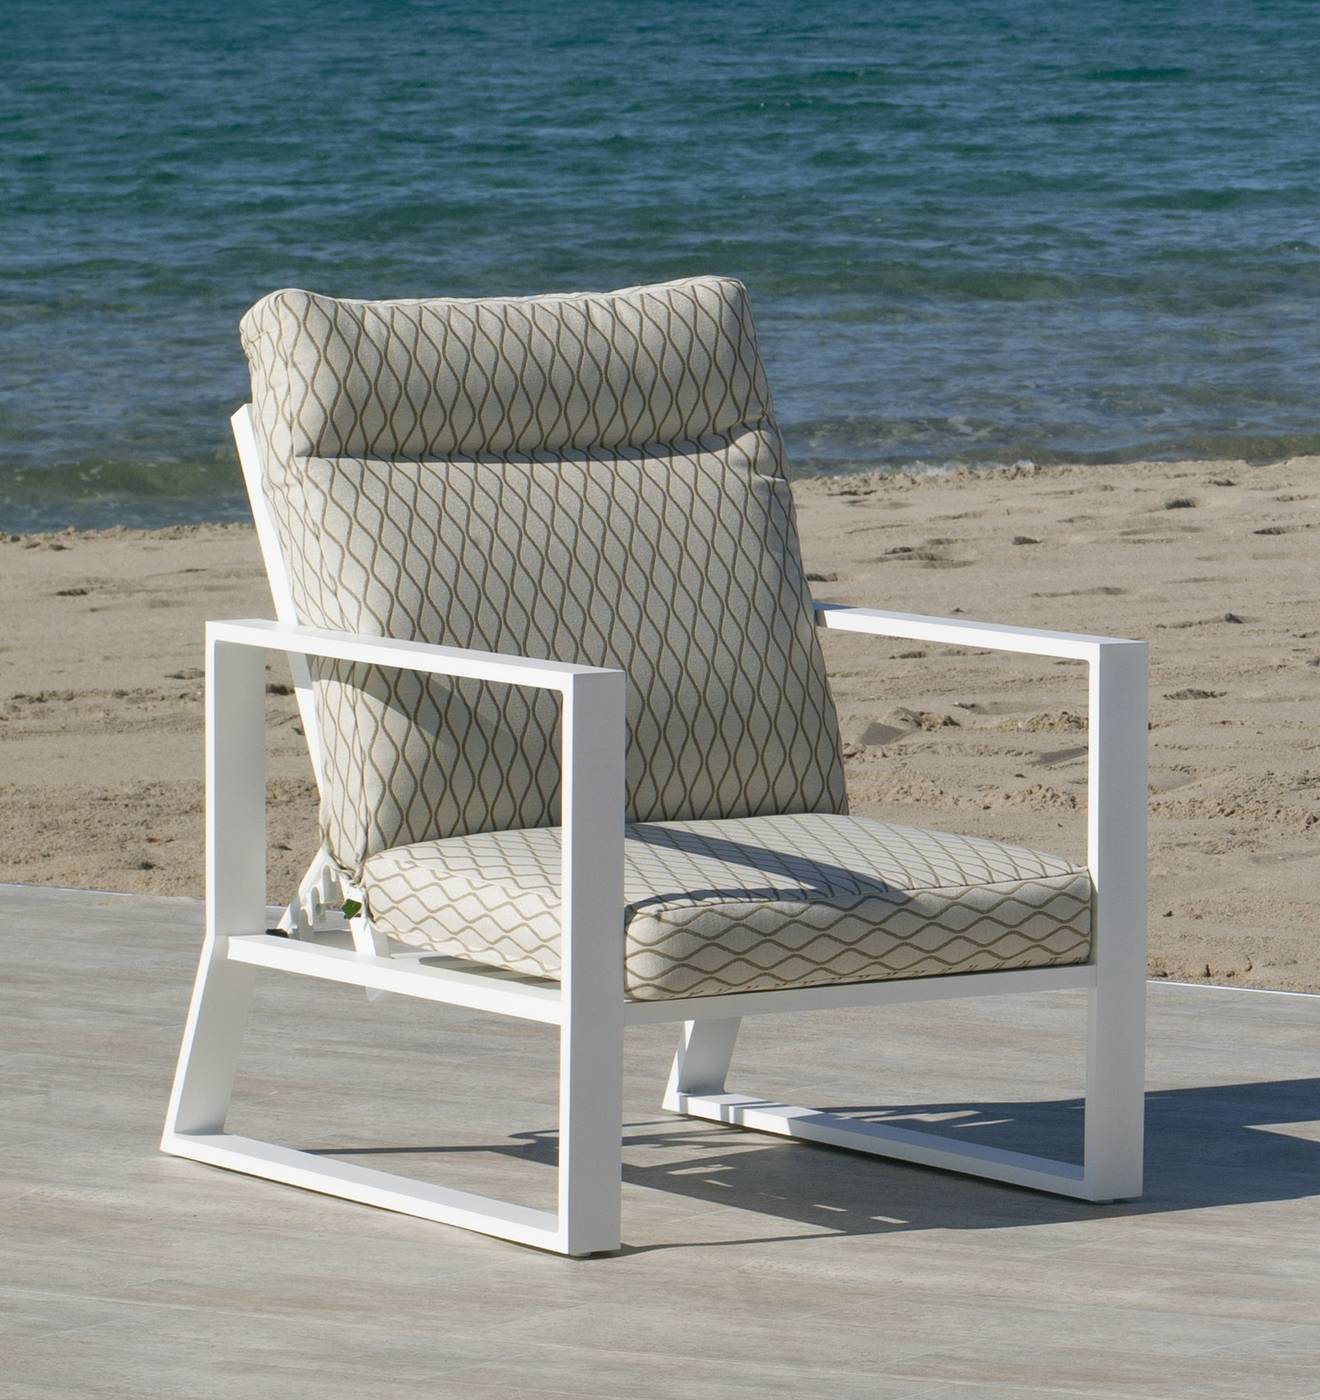 Set Aluminio Bolonia-740 - Conjunto aluminio: sofá 3 plazas + 2 sillones + mesa de centro + 2 taburetes + cojines. Respaldos reclinables. Colores: blanco, antracita o bronce.